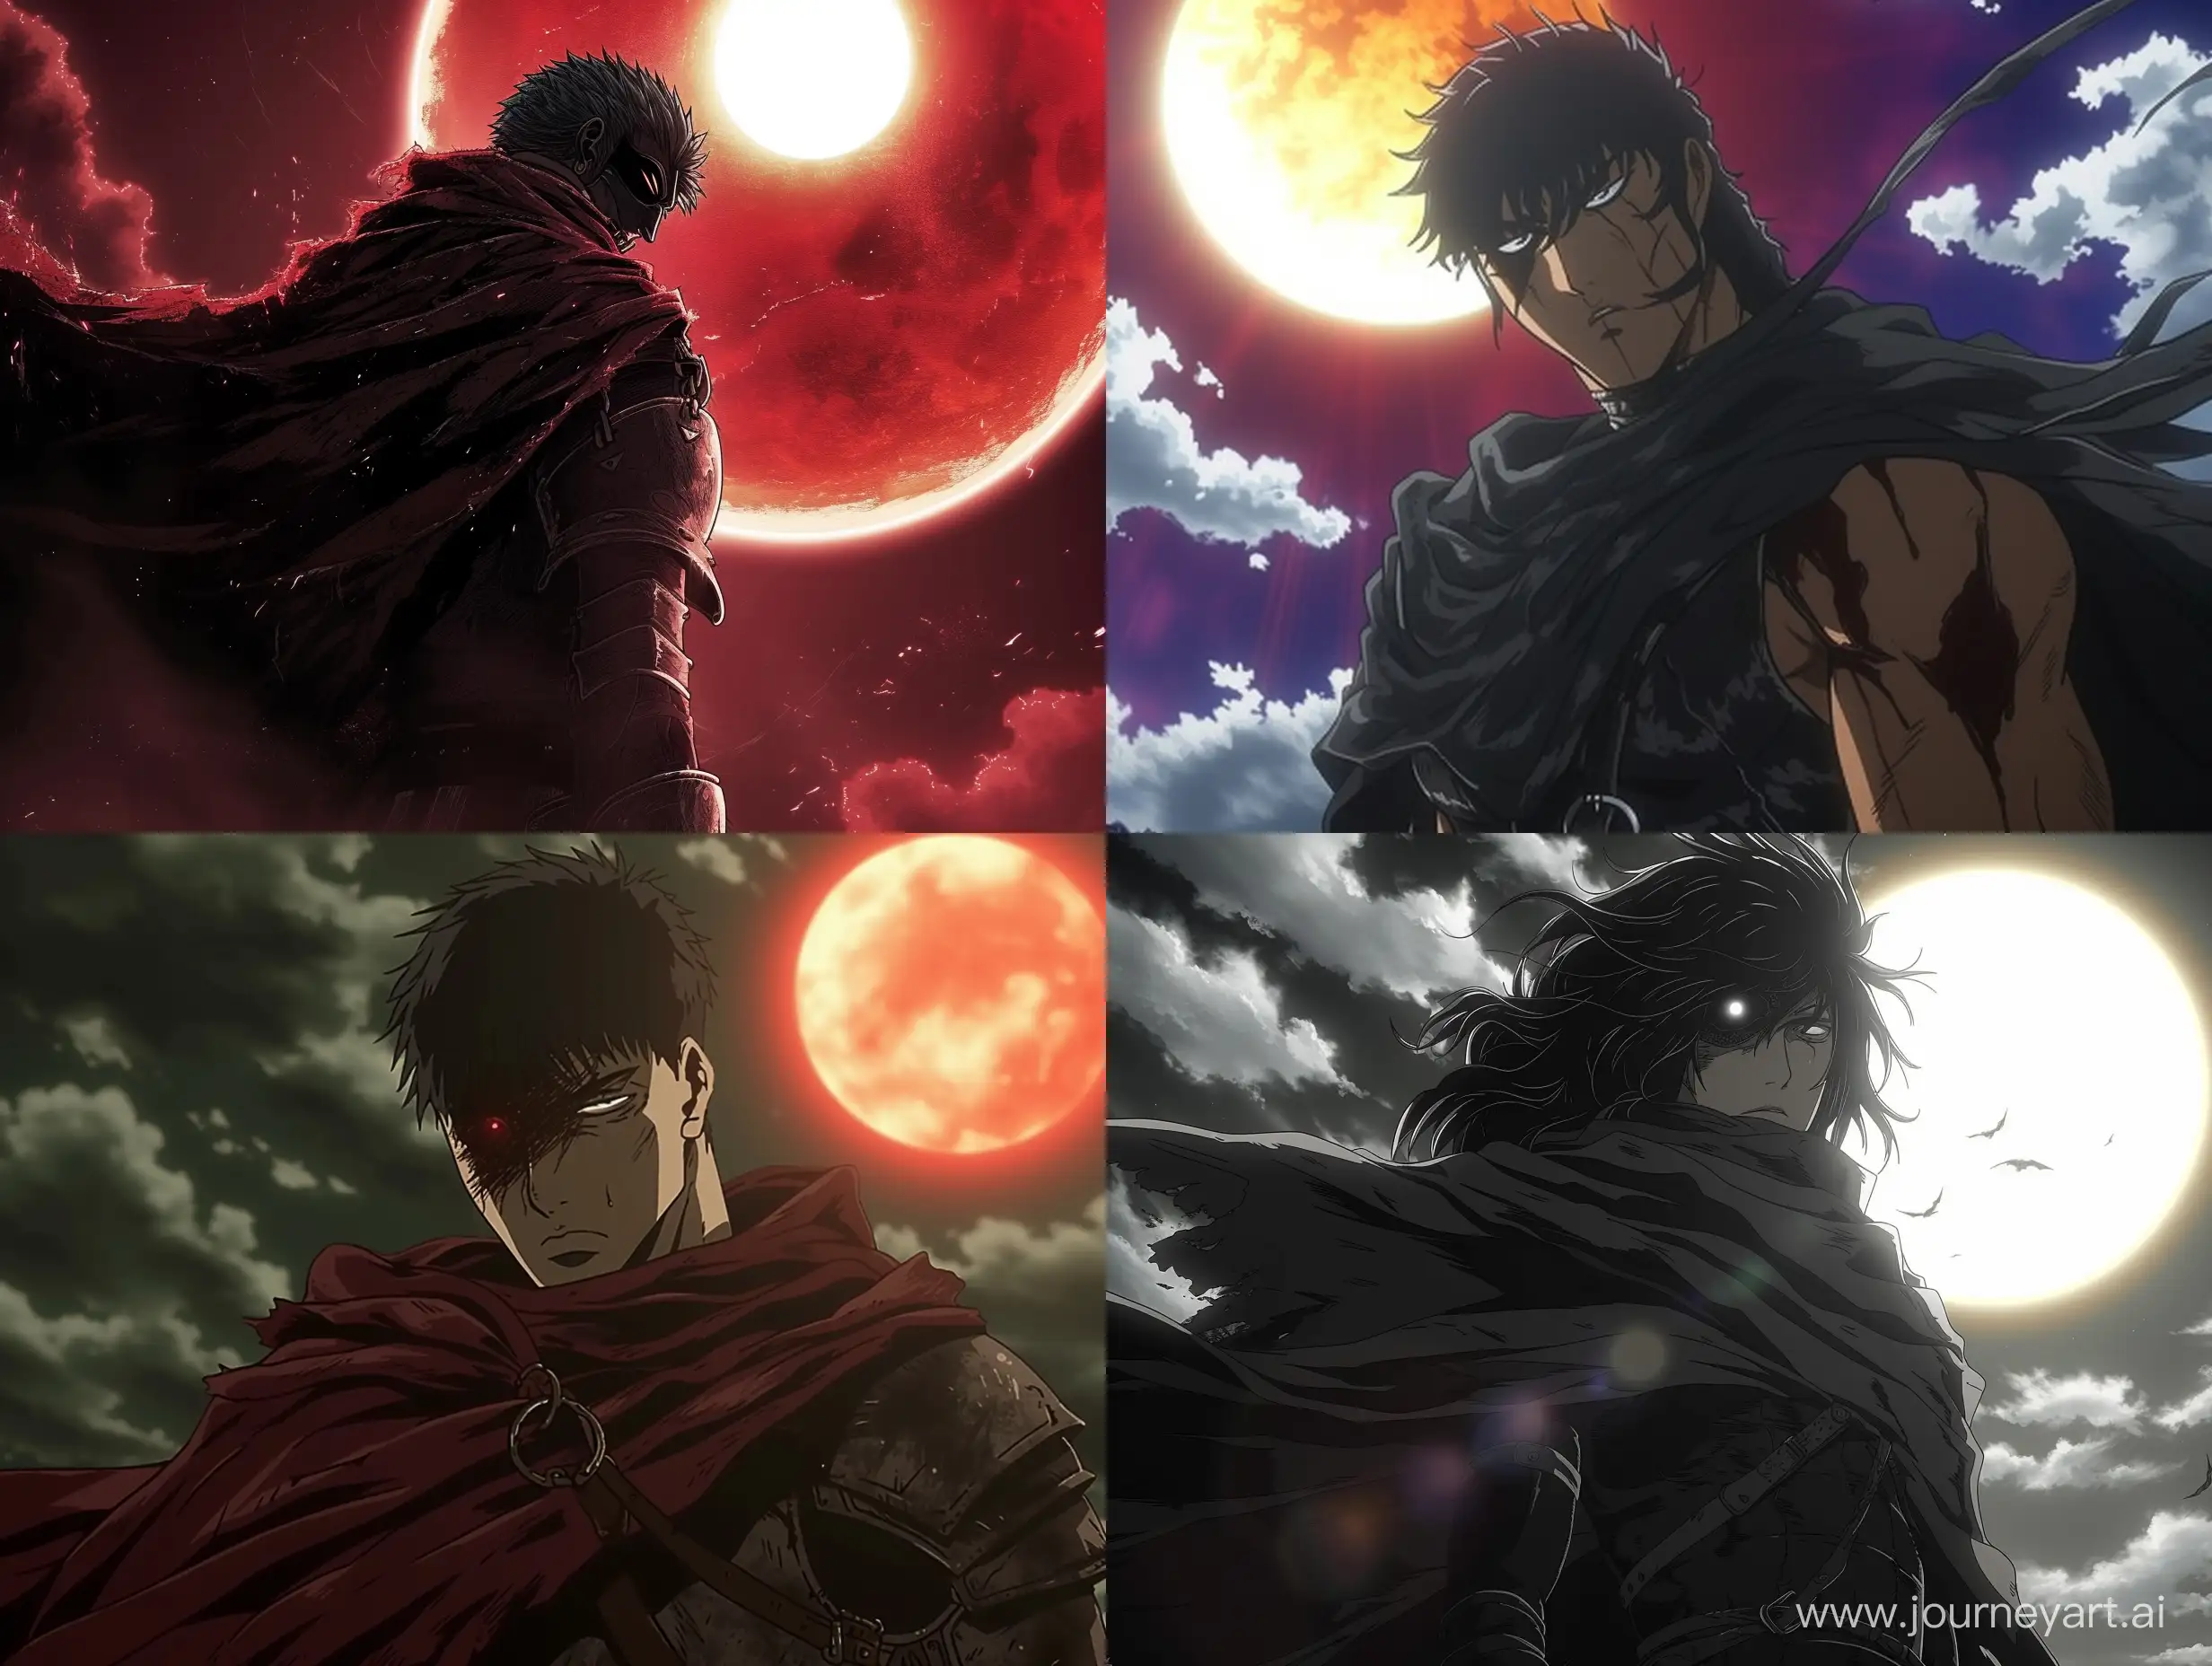 Epic-Eclipse-Scene-in-Berserk-Anime-and-Manga